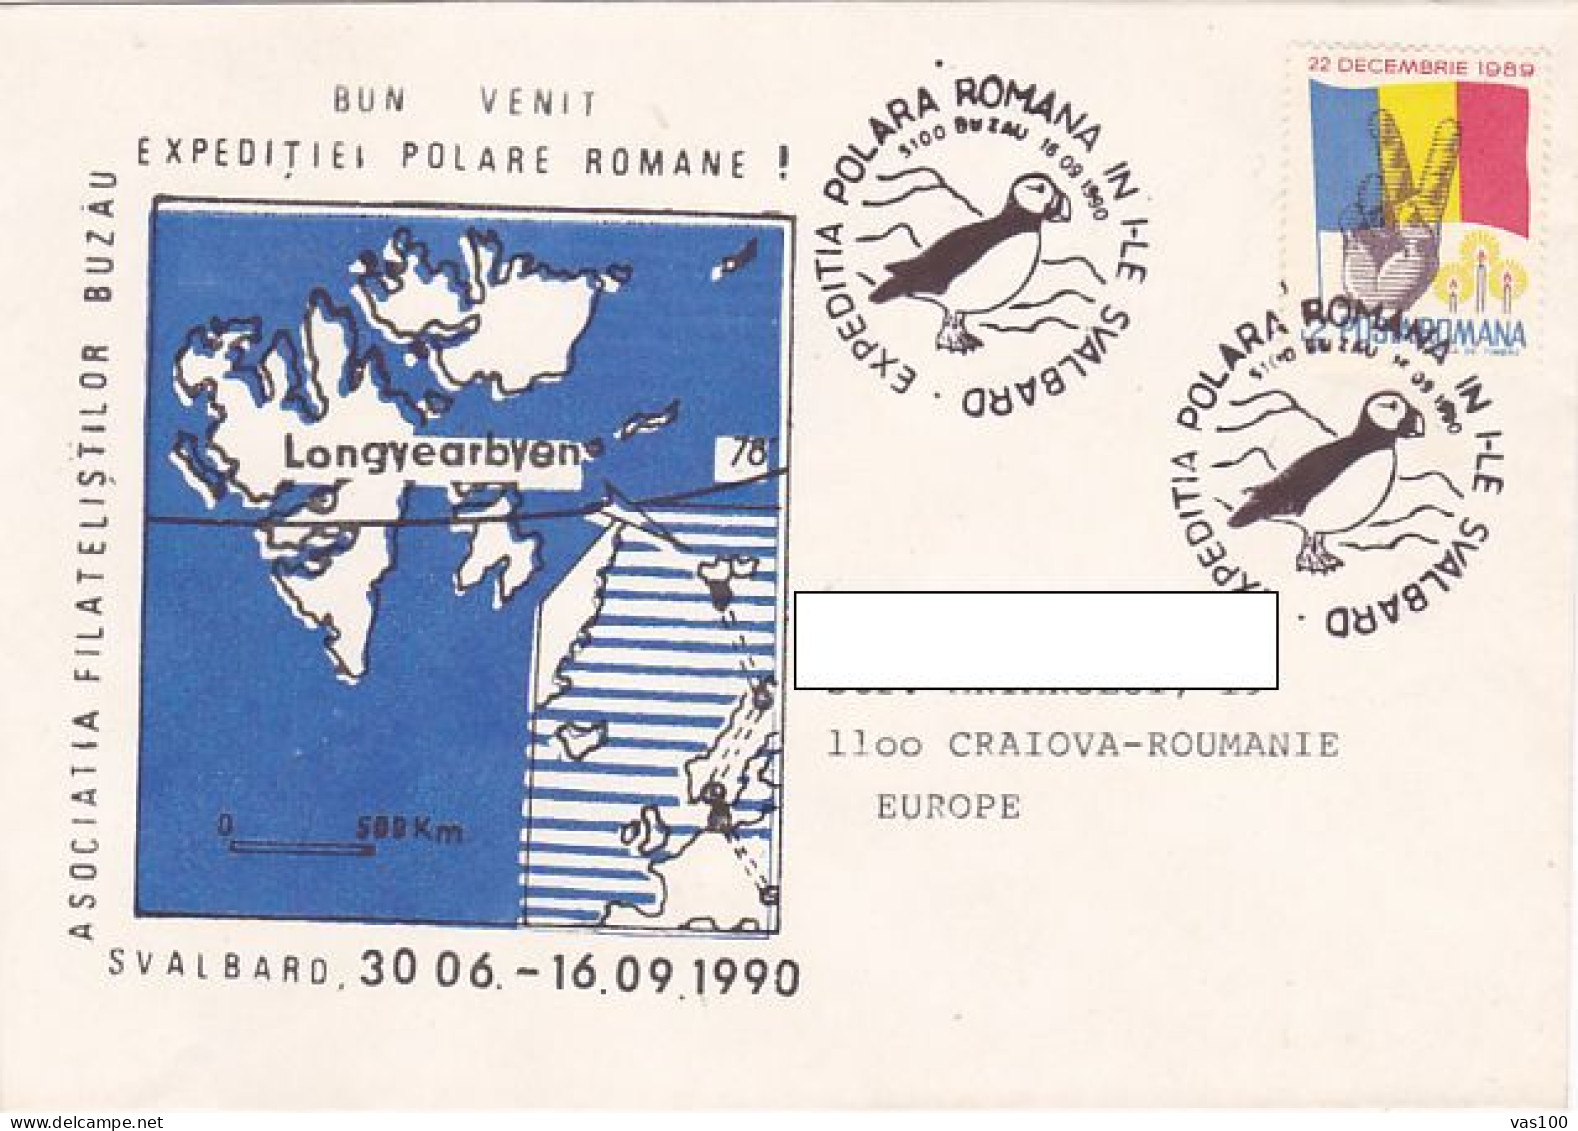 NORTH POLE, ARCTIC EXPEDITION, ROMANIAN EXPEDITION IN SVALBARD, PUFFIN, SPECIAL COVER, 1990, ROMANIA - Expediciones árticas